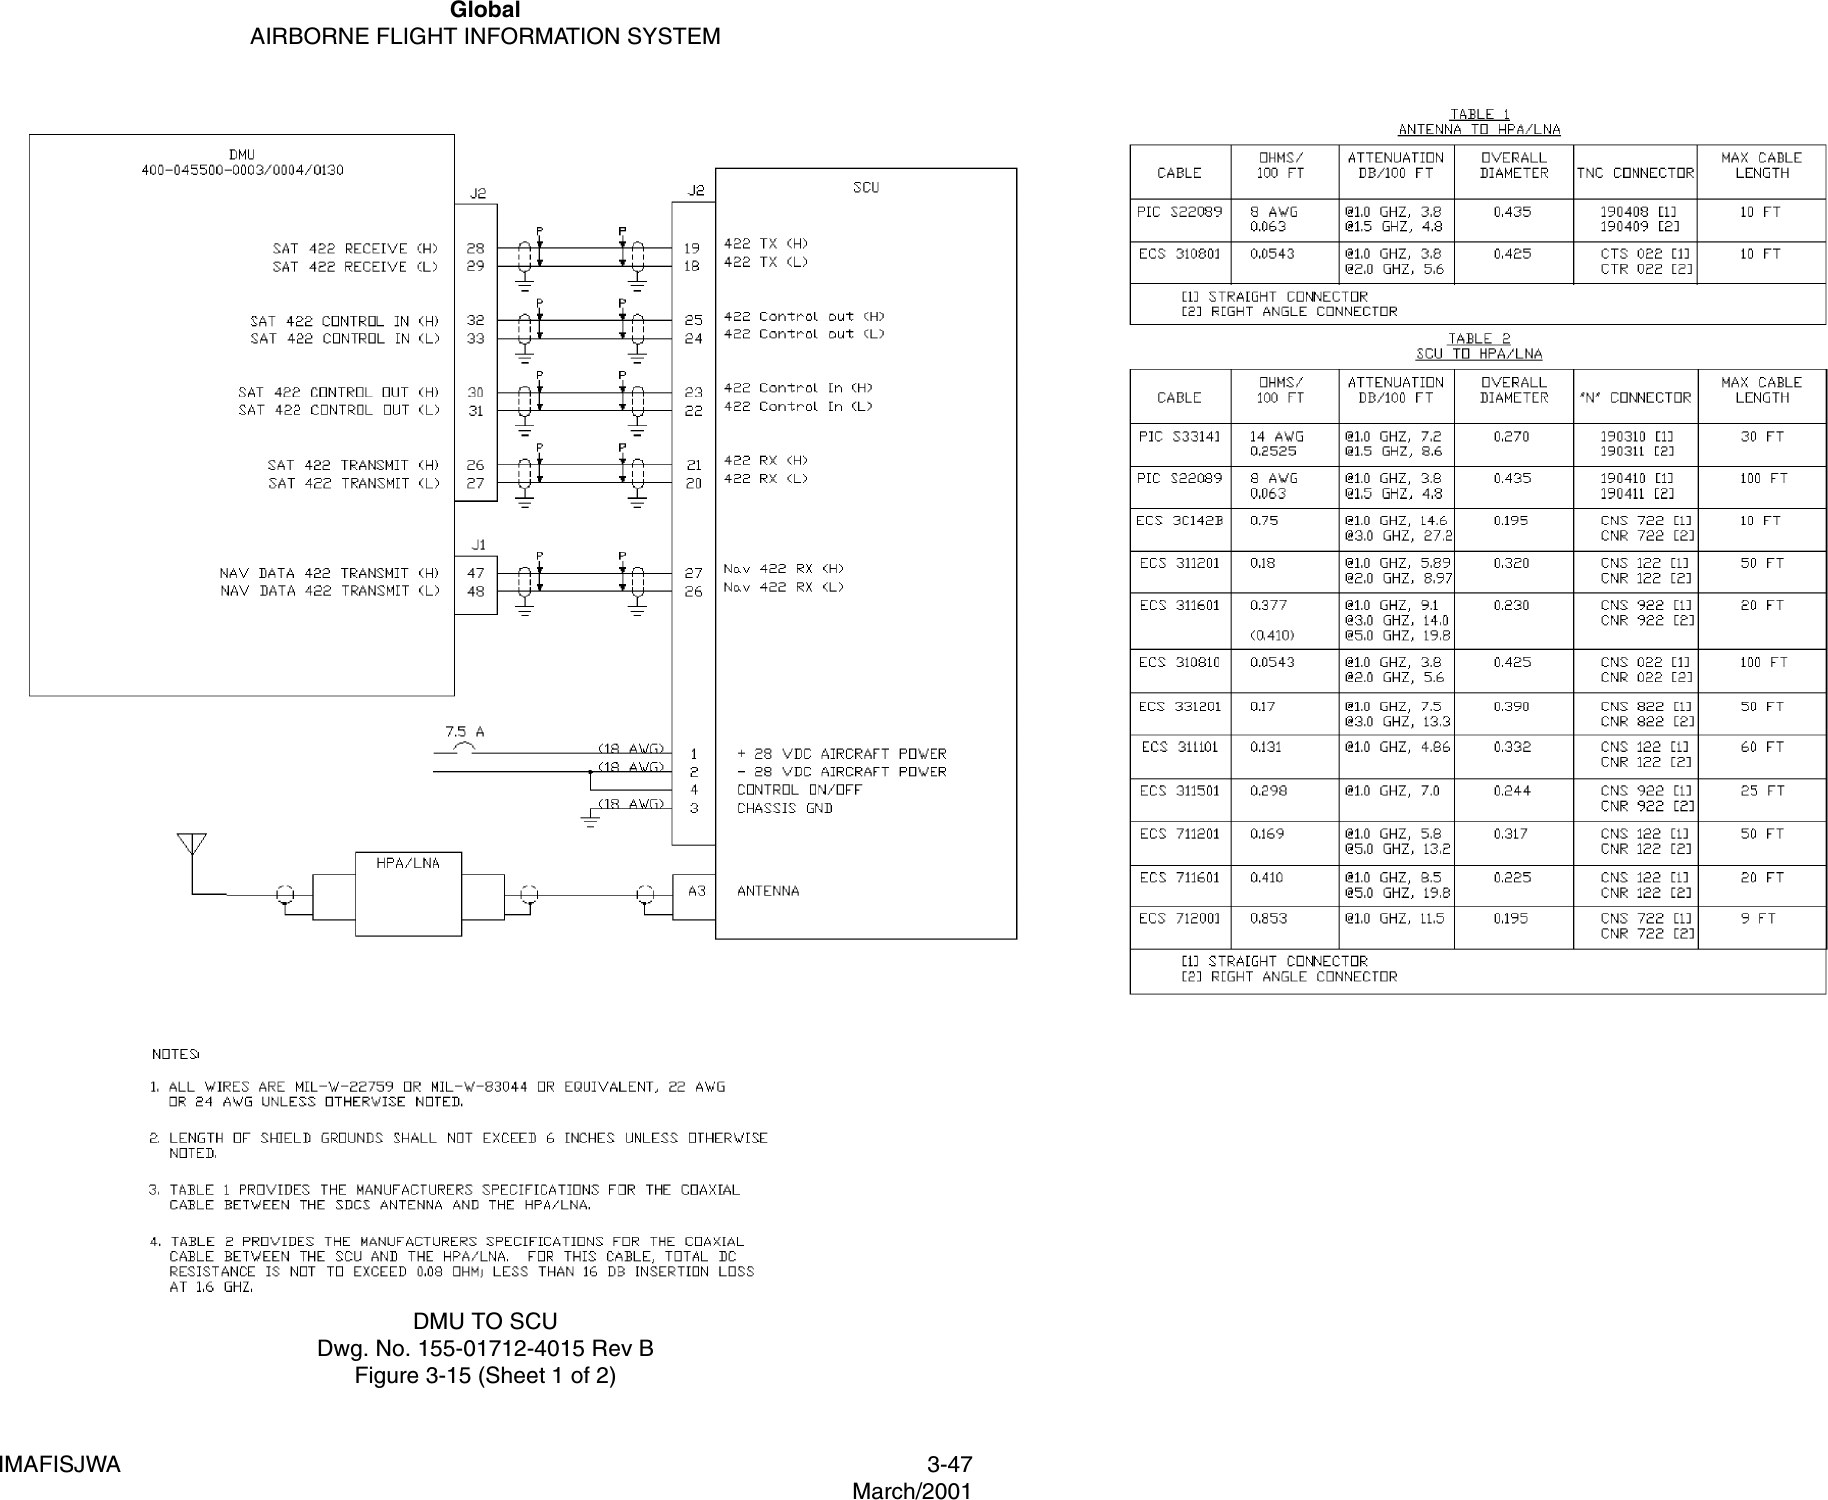 GlobalAIRBORNE FLIGHT INFORMATION SYSTEMIMAFISJWA 3-47March/2001DMU TO SCUDwg. No. 155-01712-4015 Rev BFigure 3-15 (Sheet 1 of 2)